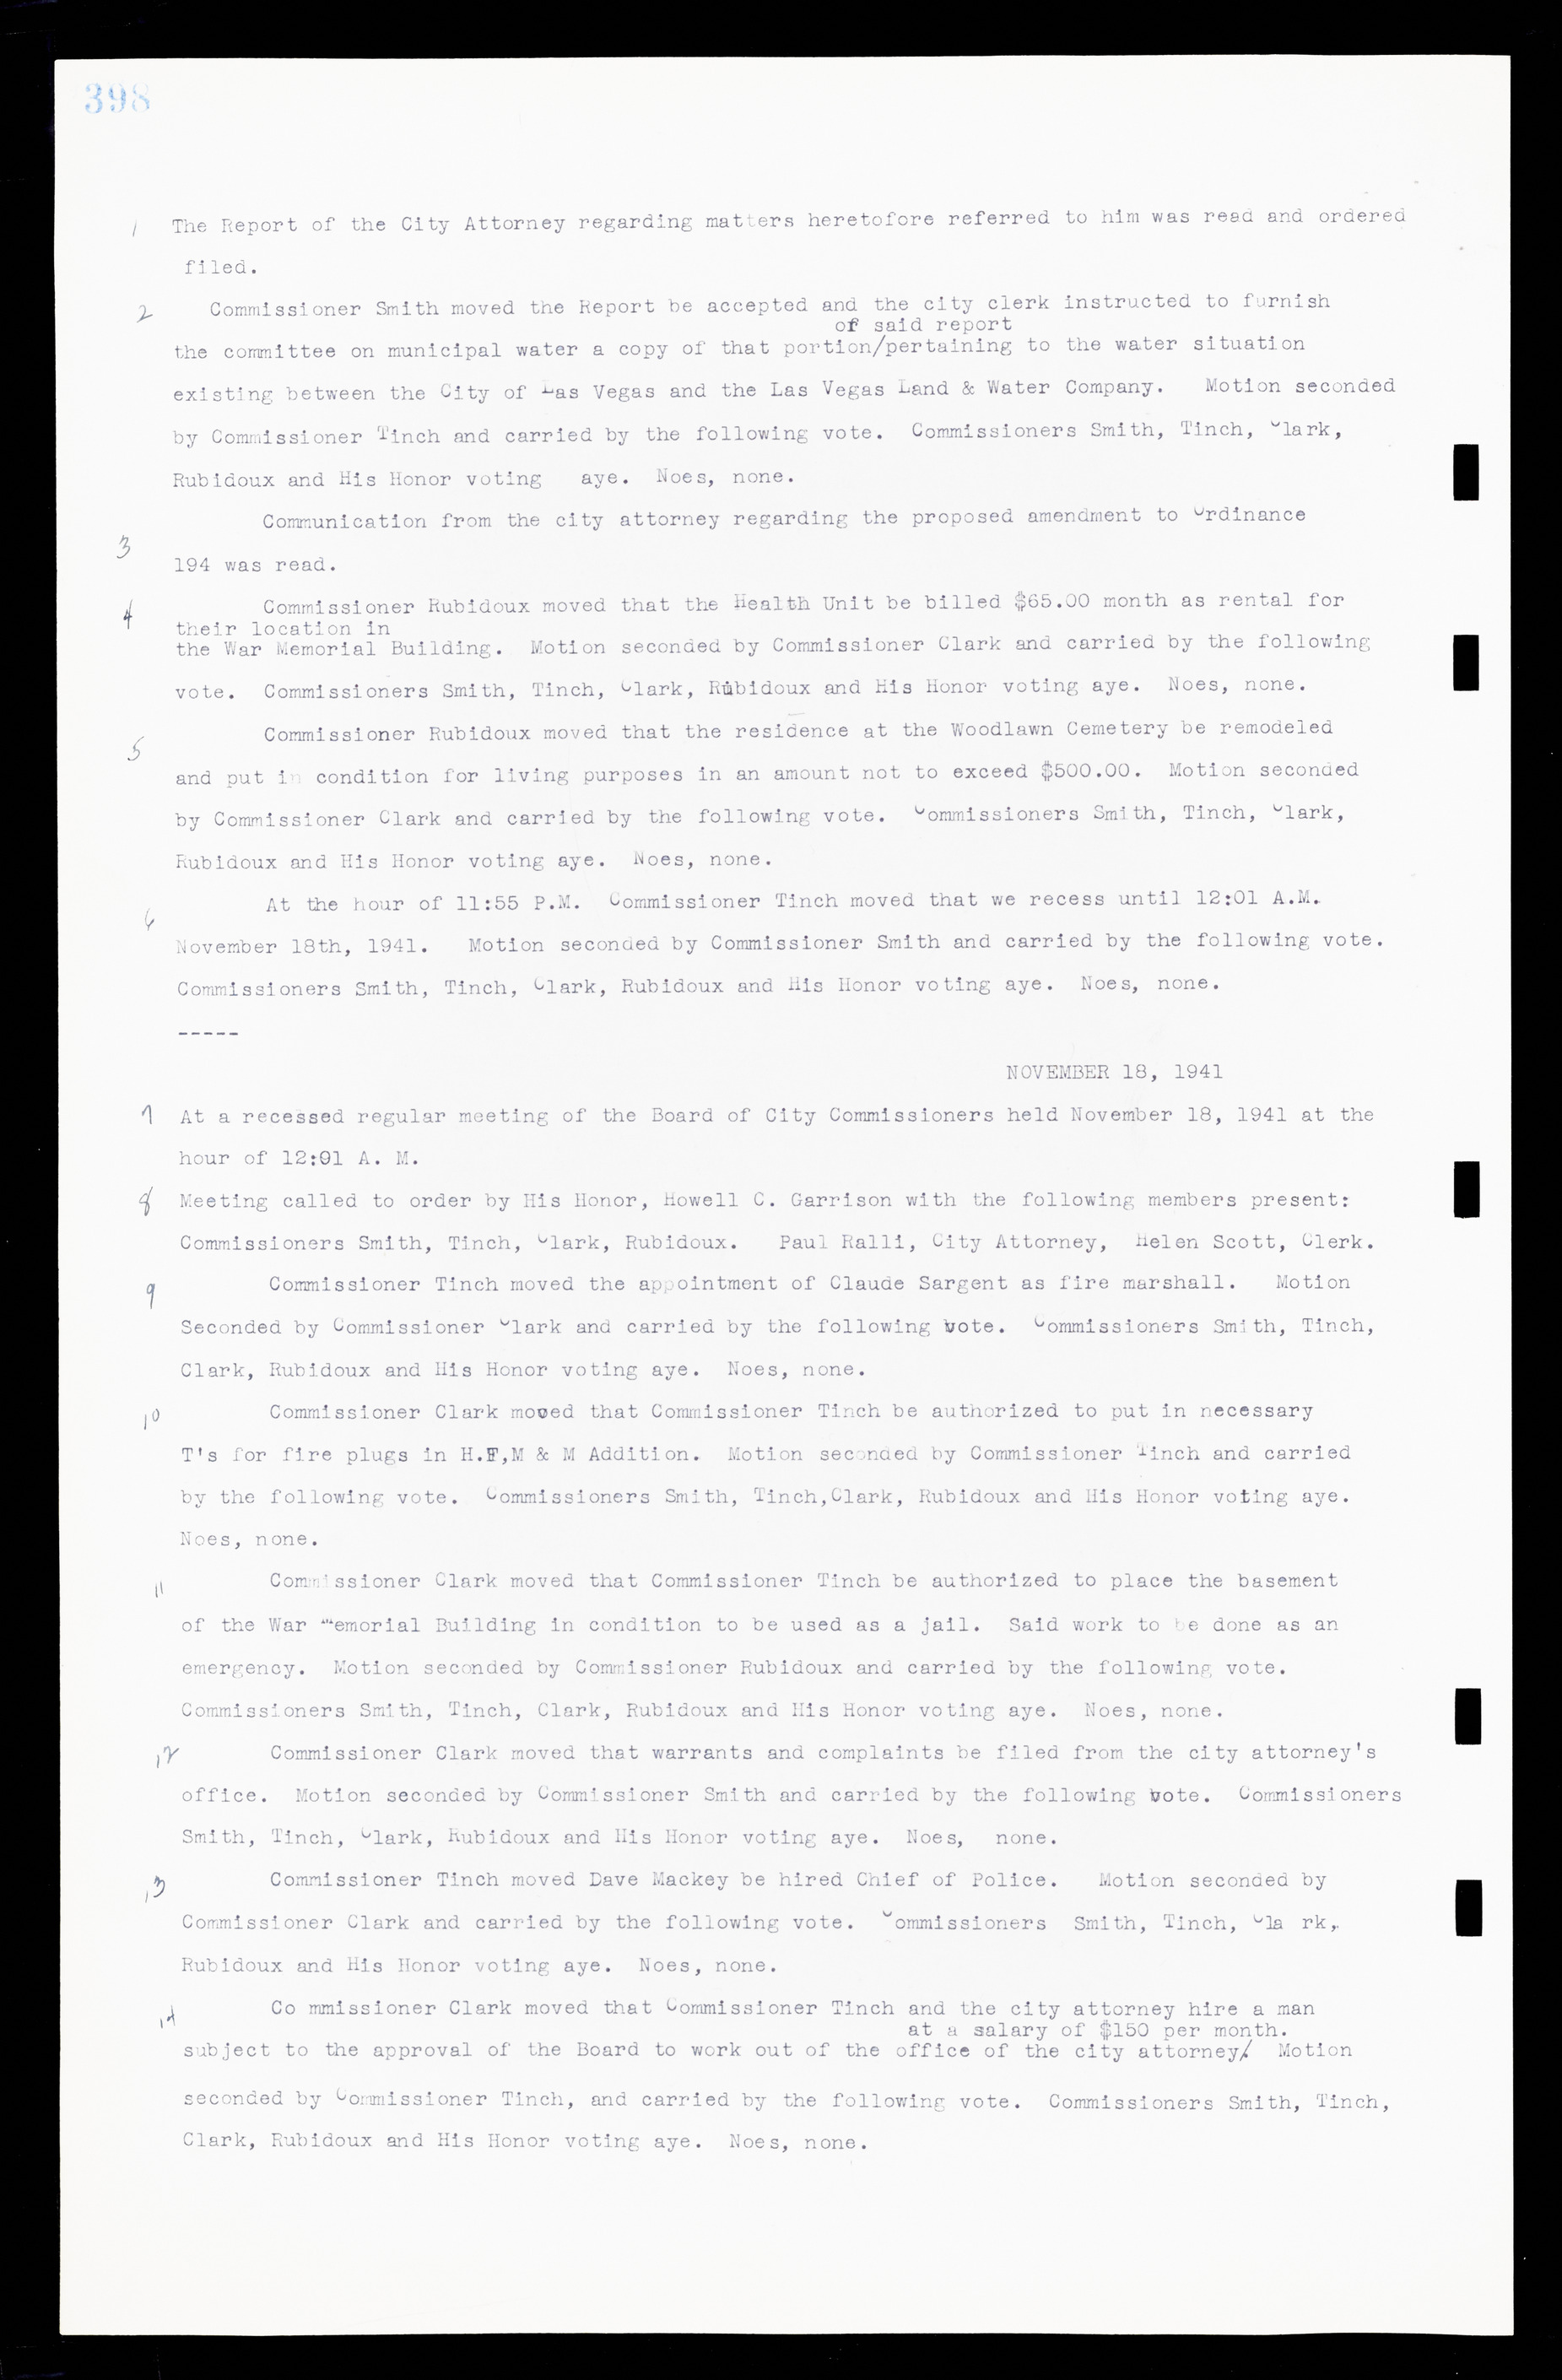 Las Vegas City Commission Minutes, February 17, 1937 to August 4, 1942, lvc000004-424